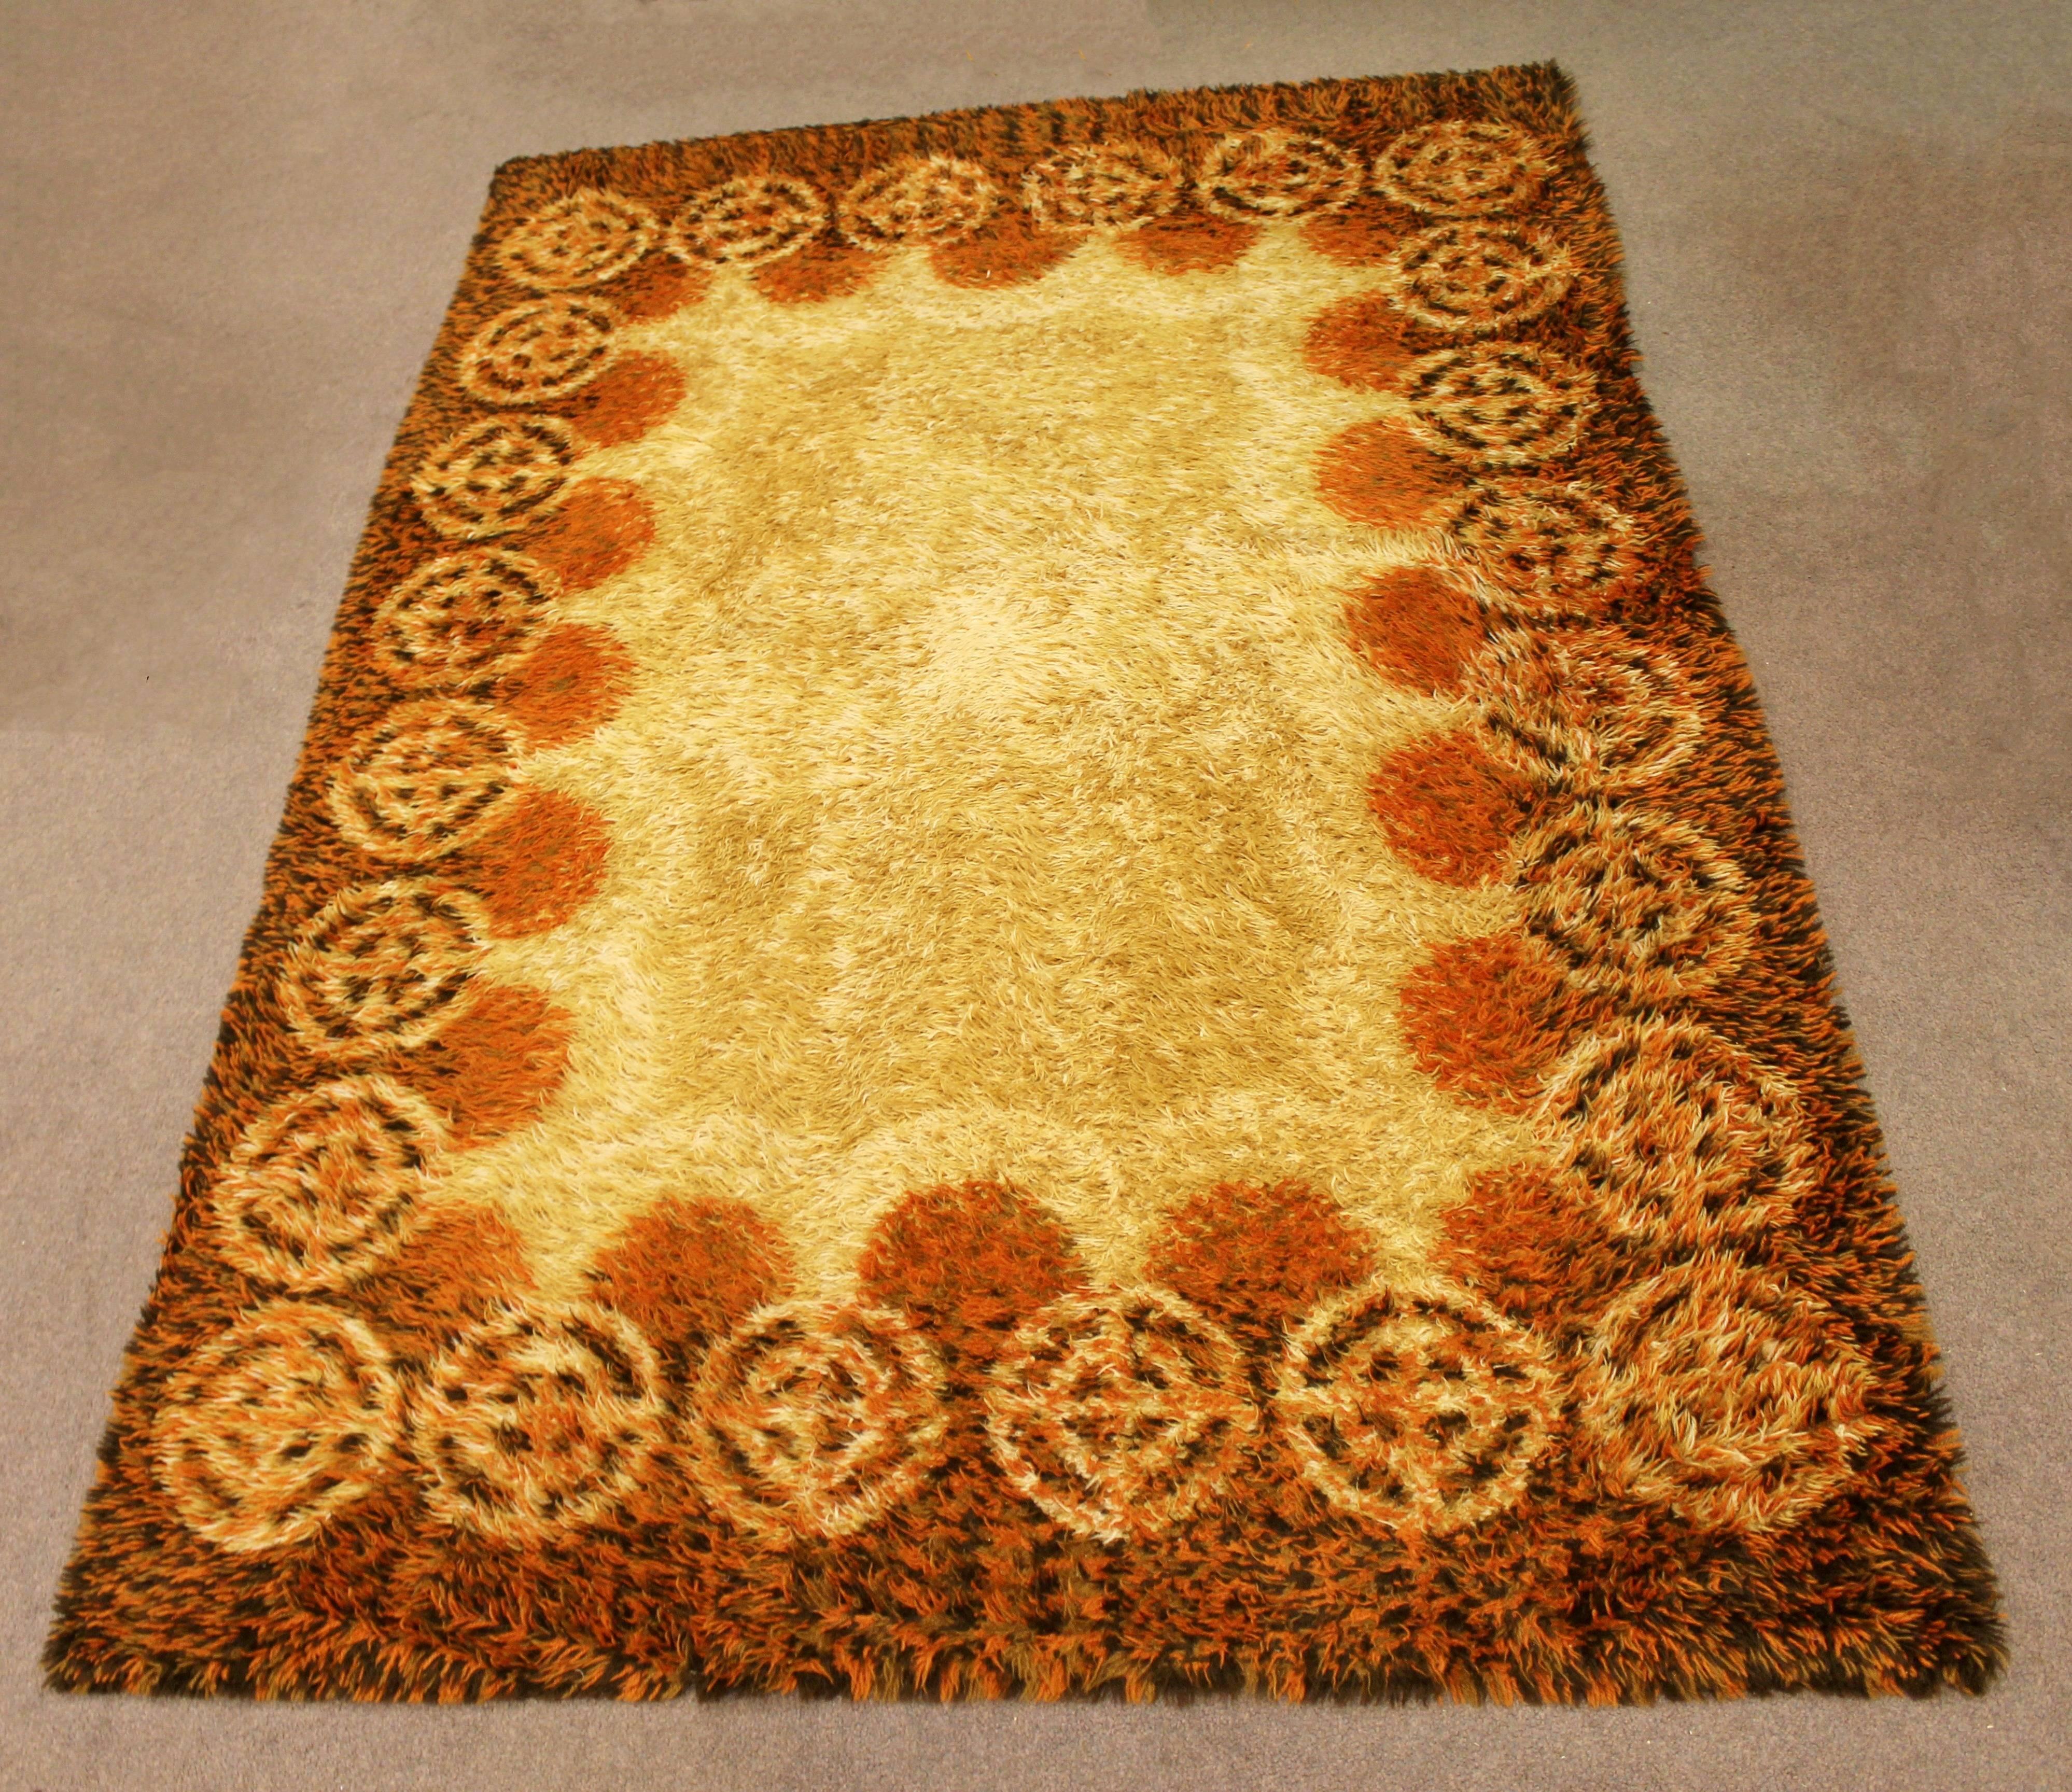 American Mid-Century Modern Rectangular Rya Area Rug Carpet Orange 1960s Sunburst Pattern